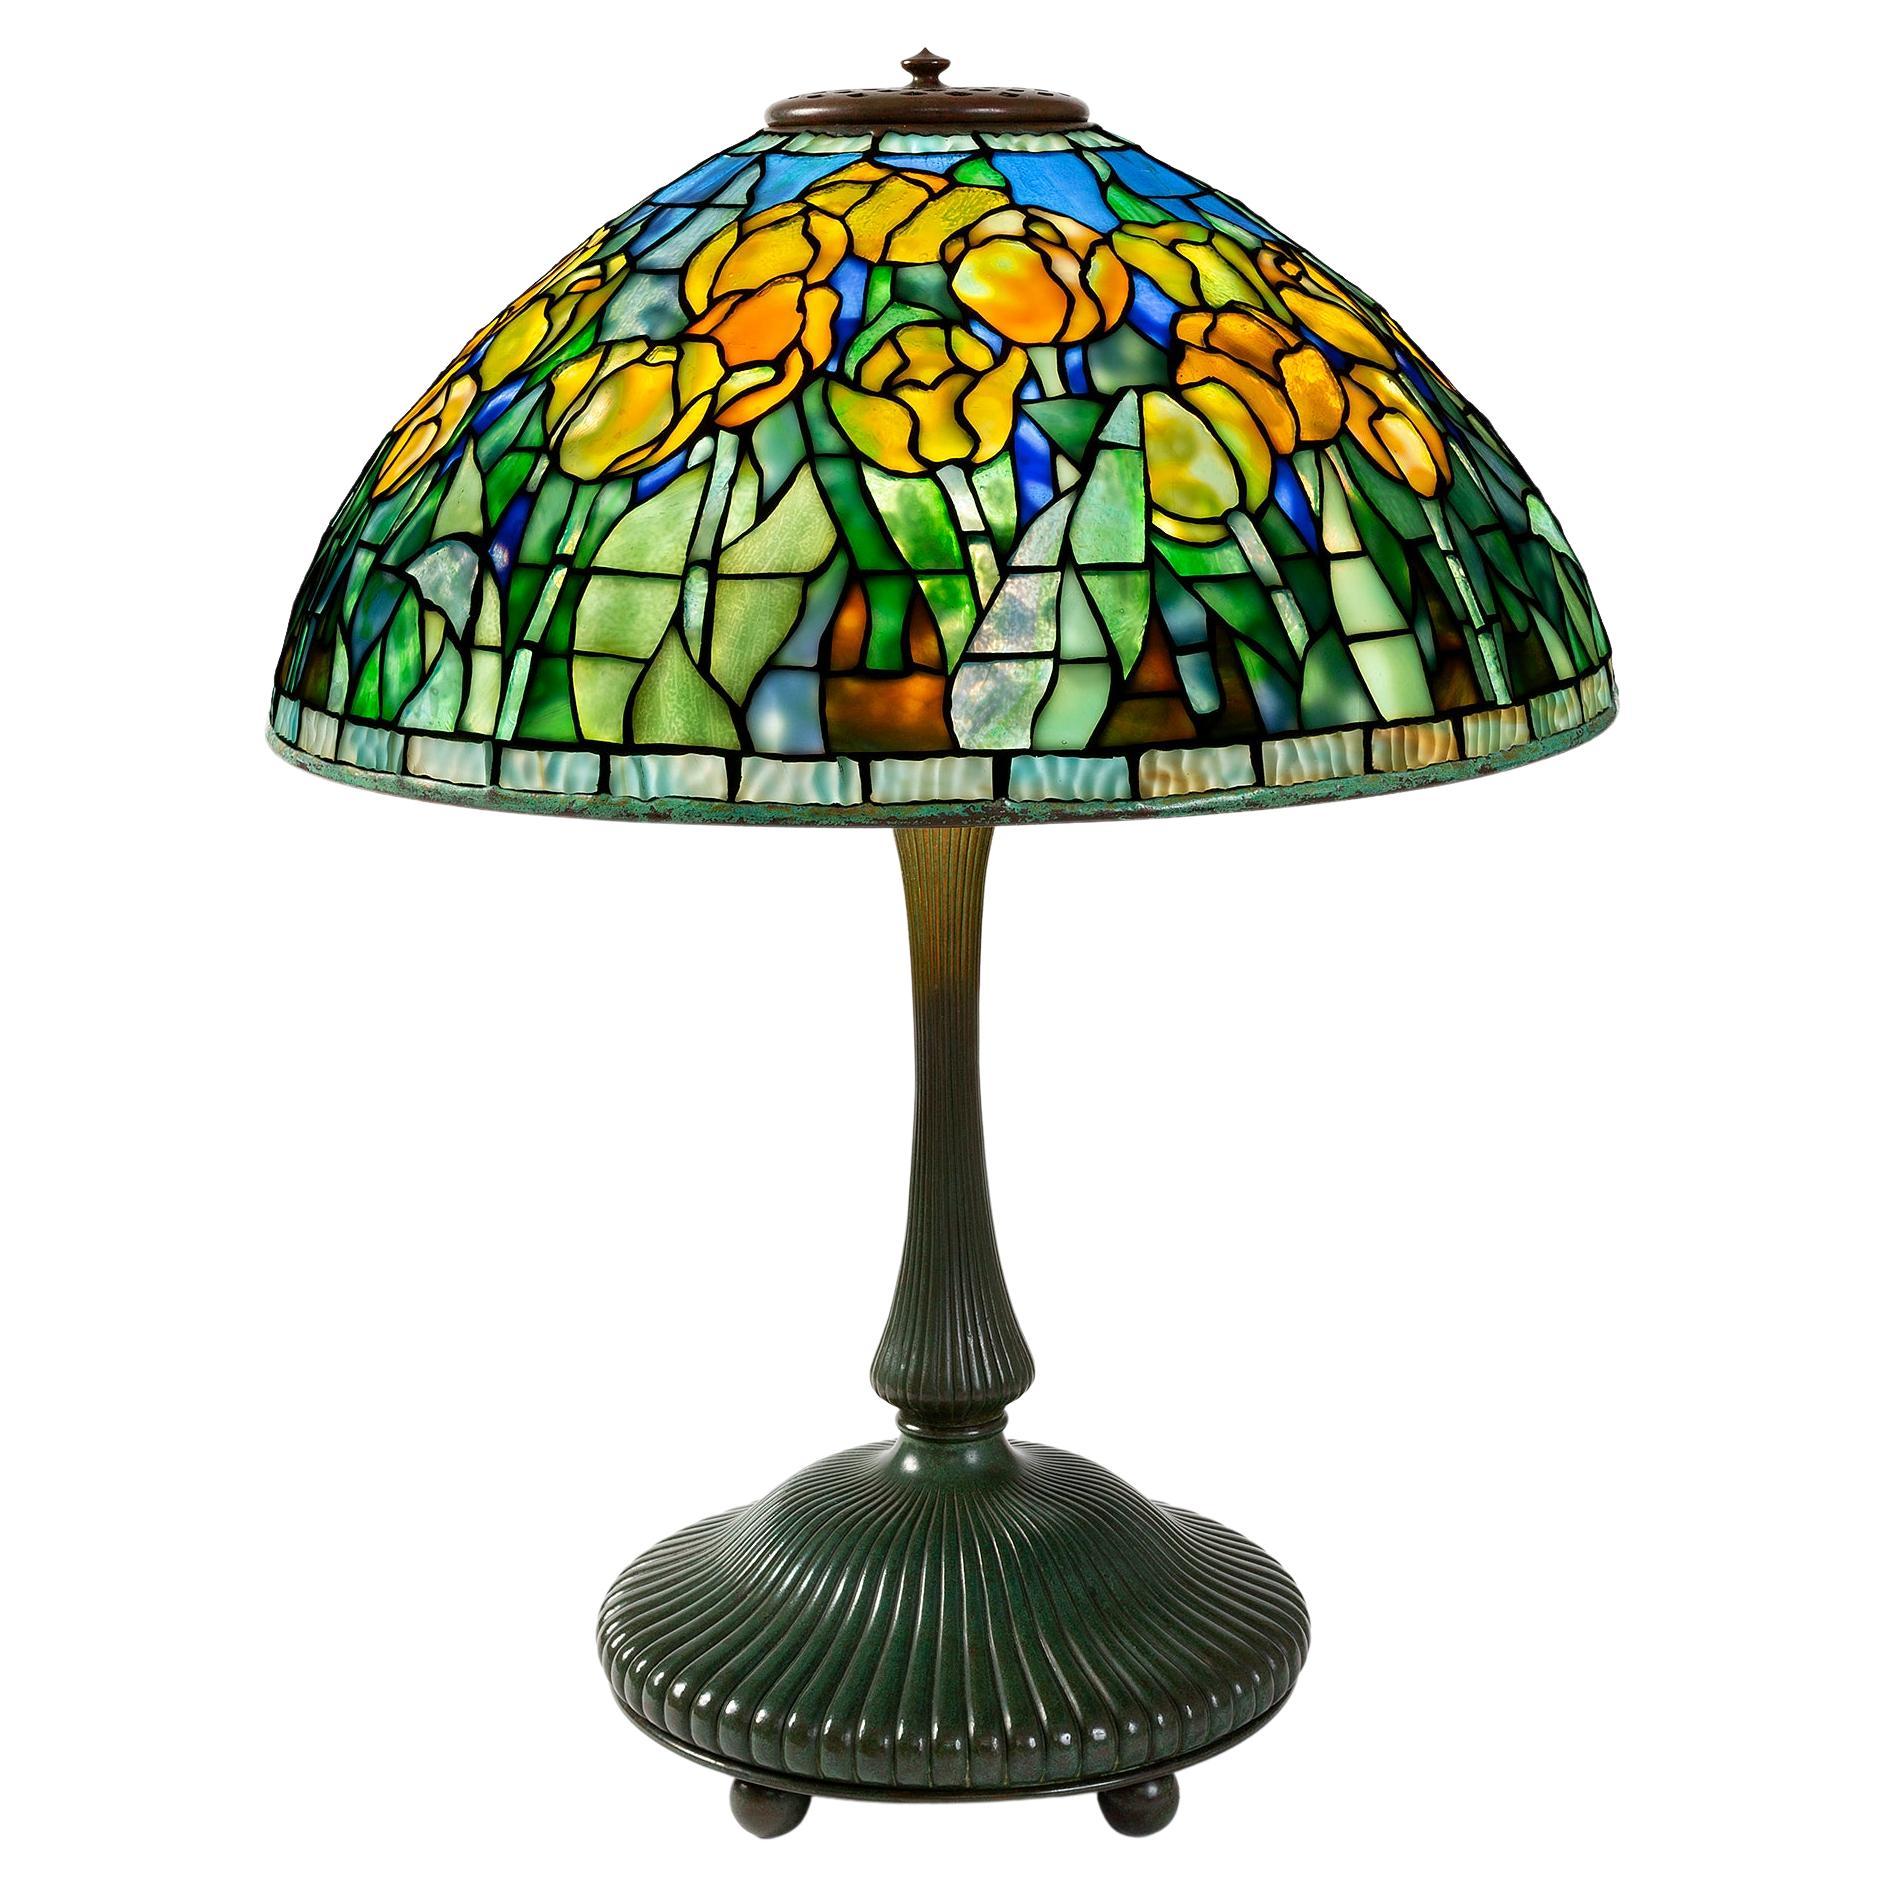 Tiffany Studios New York "Tulip" Table Lamp